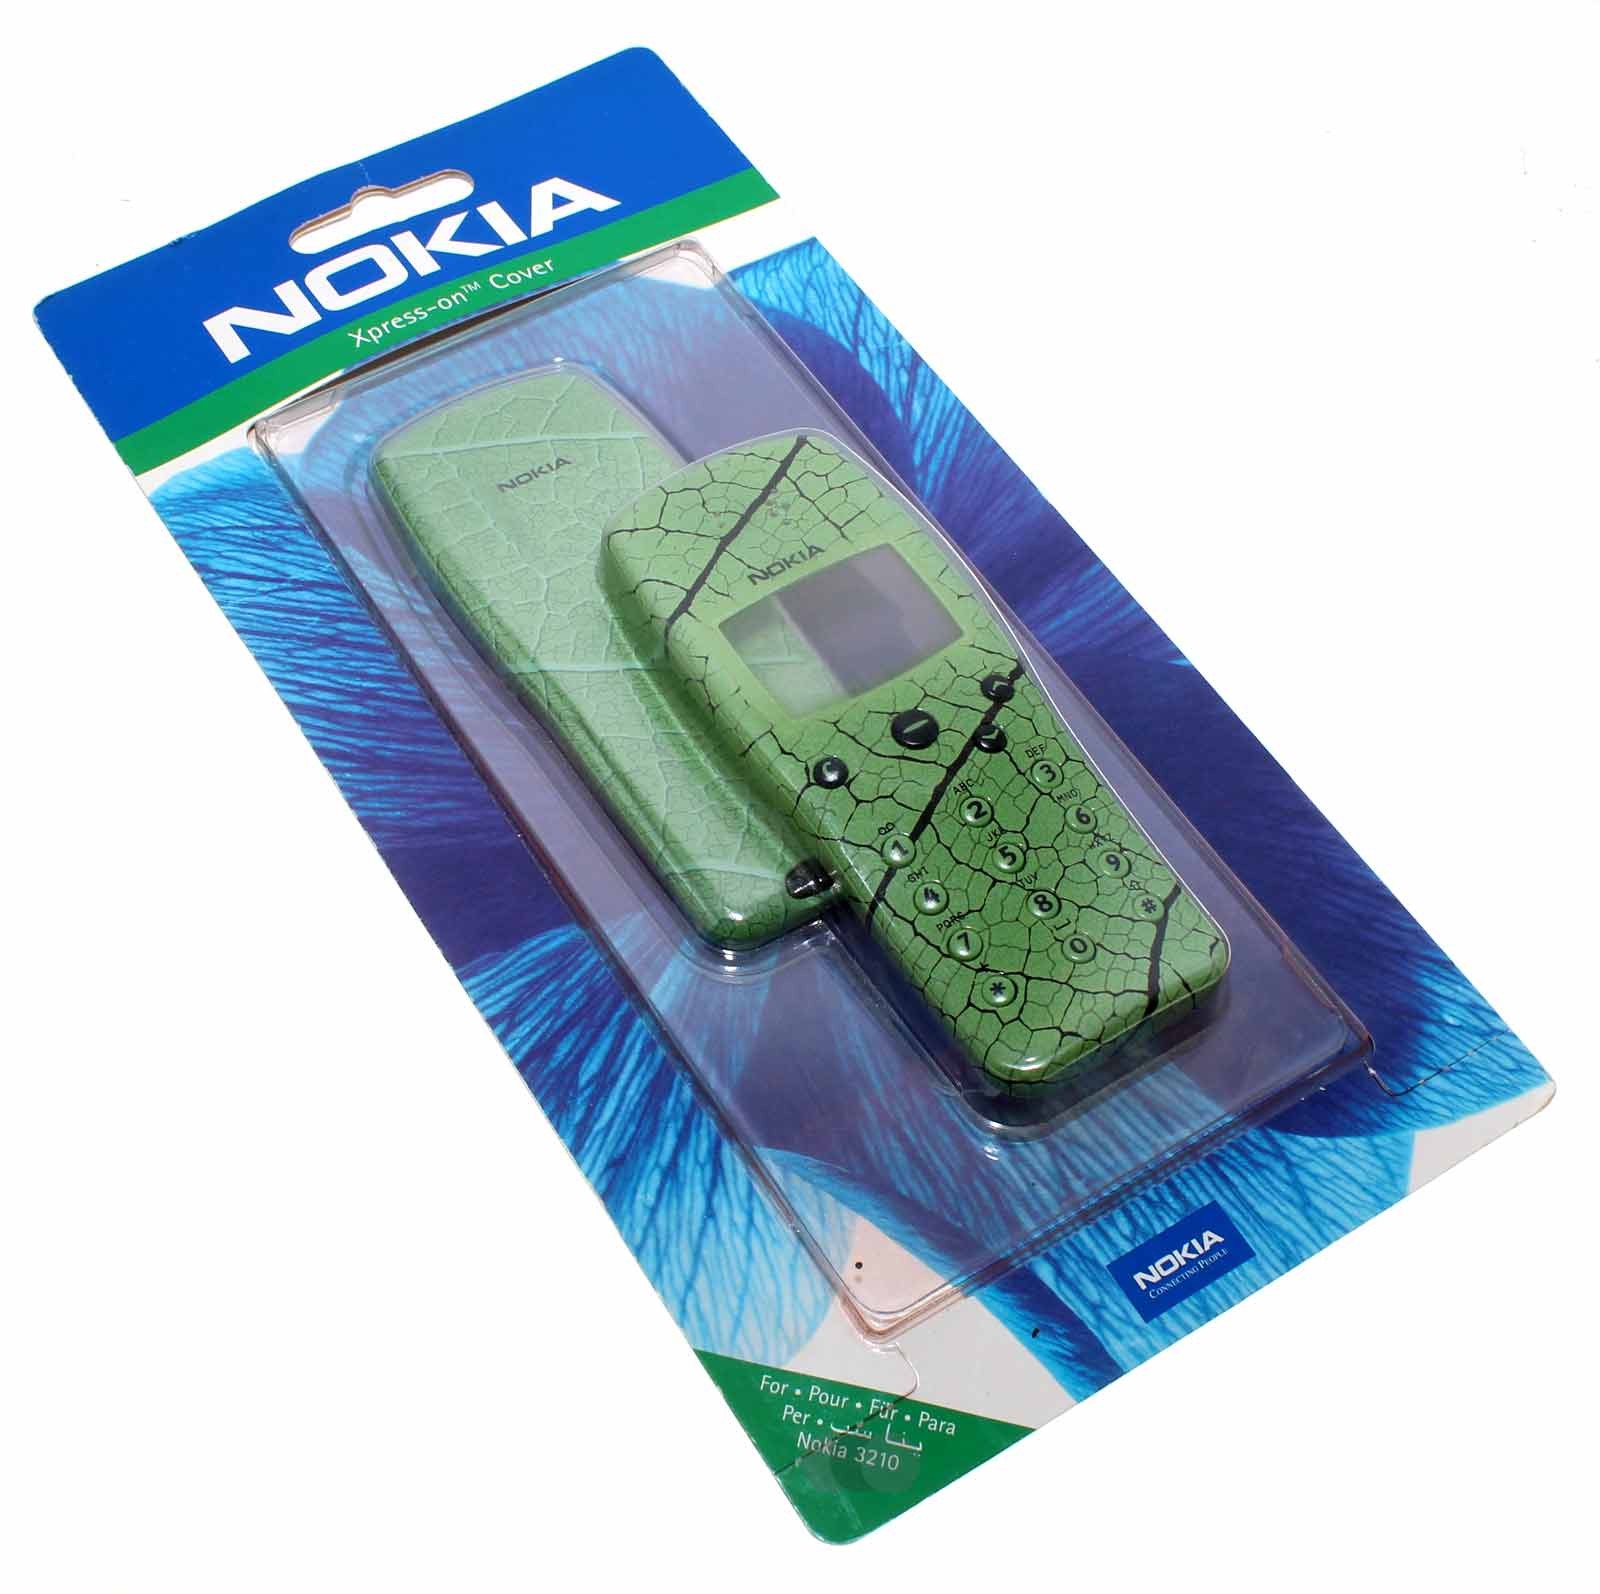 Nokia SKR-8 (Blatt grün) Xpress-on Cover für Nokia 3210 Handy, Mobiltelefon